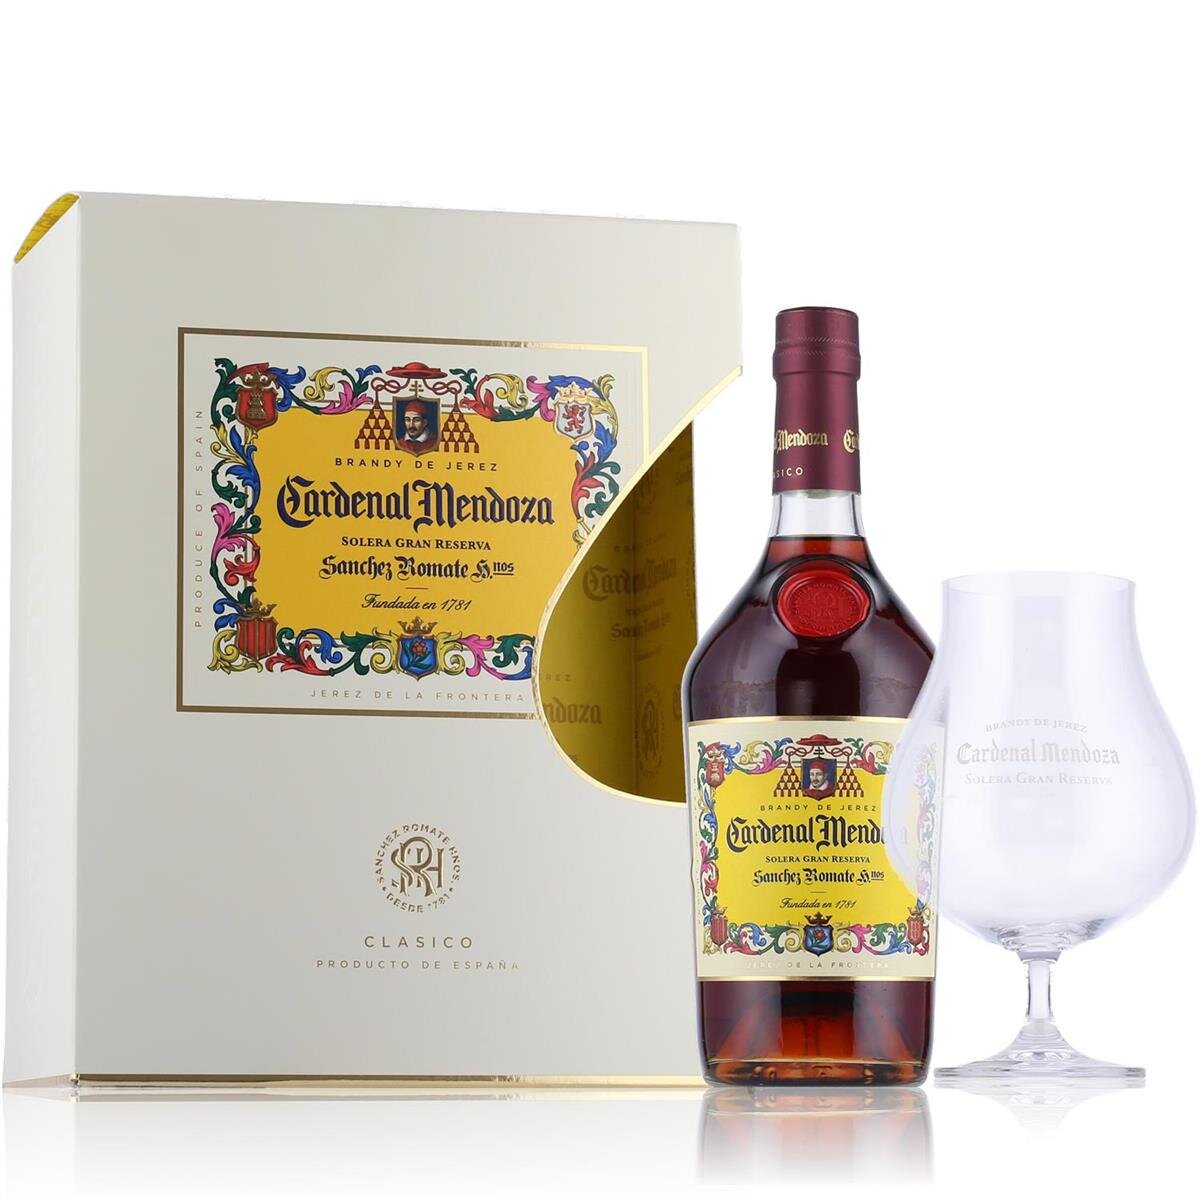 Geschenk Cardenal Solera Brandy in Vol. Mendoza 40% Gran 0,7l Reserva